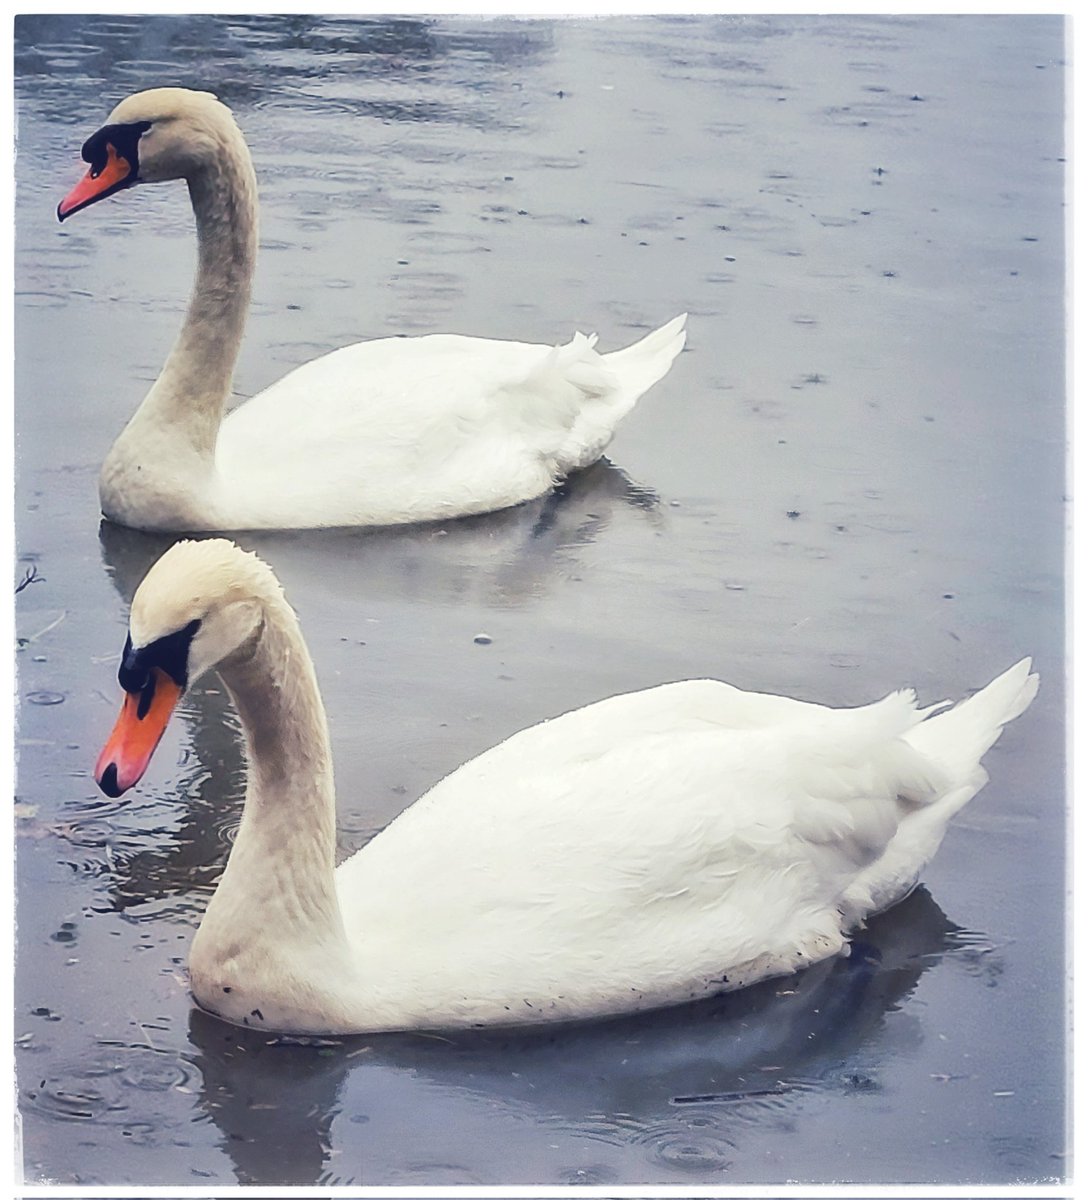 Twice as nice #twins #Swans #duo #BirdsOfTwitter #birds @BirderBro @BirdsByStiofan @WestOzPhoto @CampervanPhoto @Felinedoggeous @naturephotos55 @Britnatureguide @azgibsonz @UsmanShahid344 @admired_art @DorsetWildlife #riverstour #naturereserve #River #outdoors